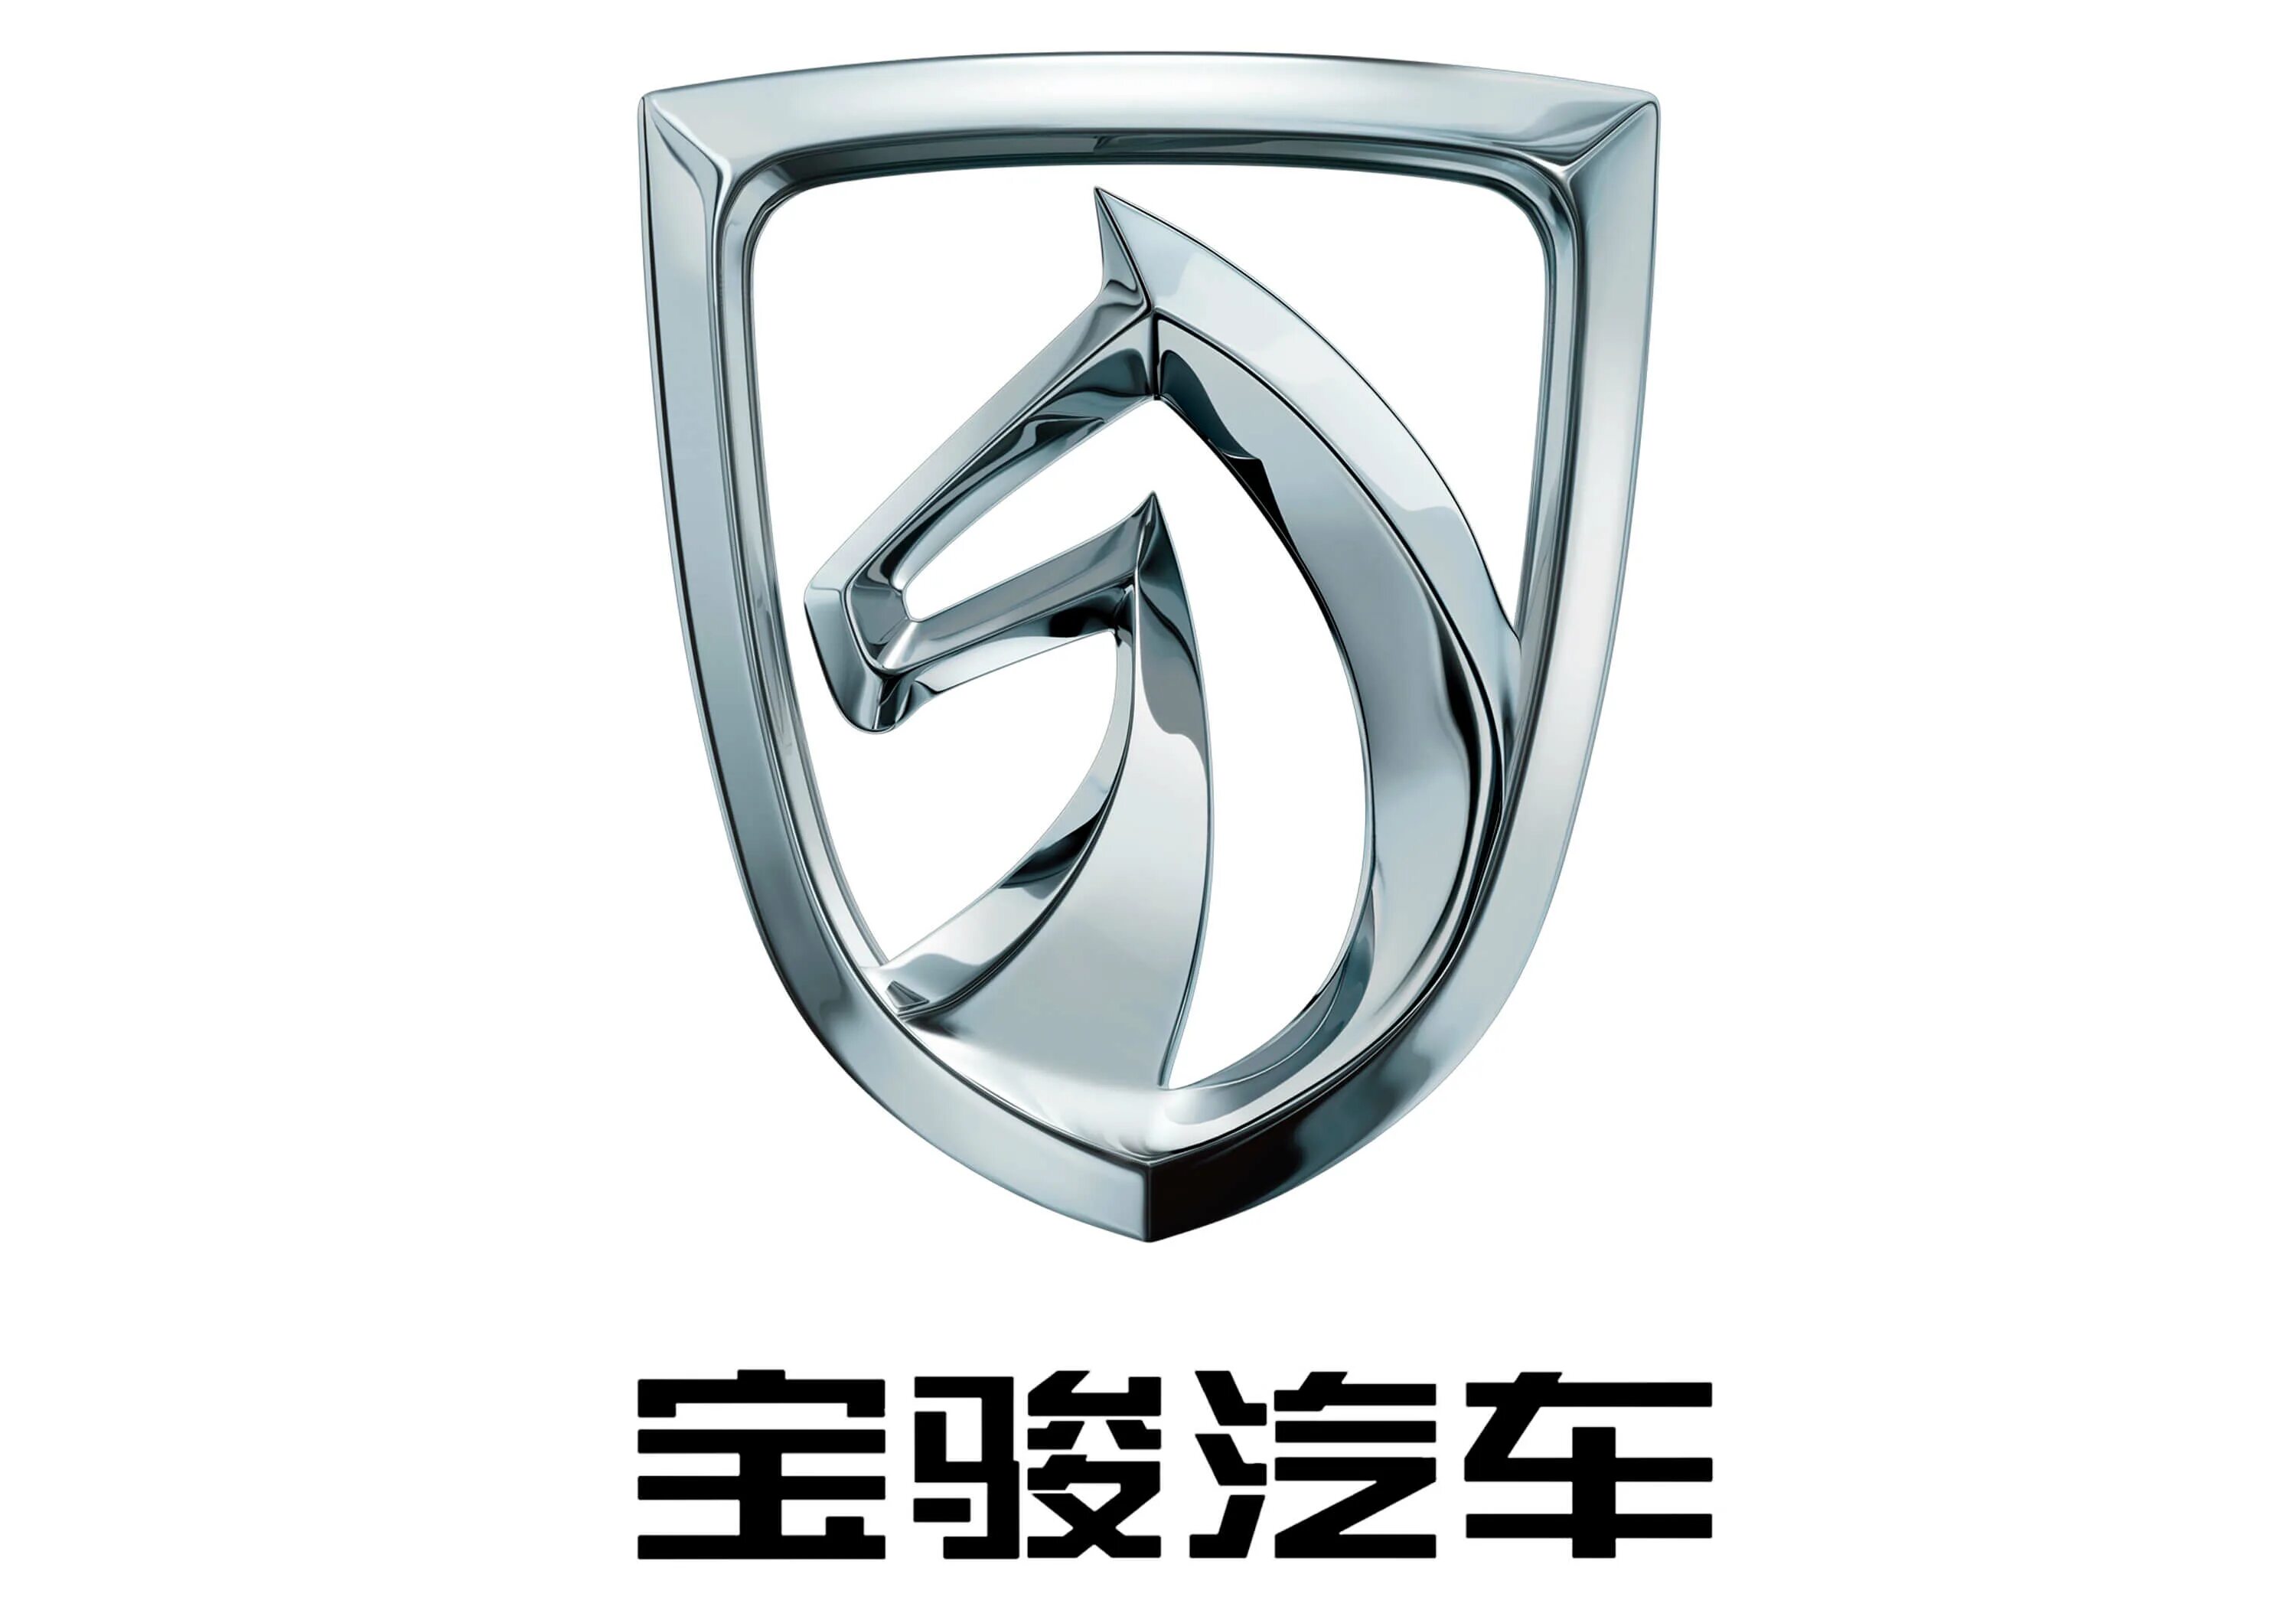 Значки китайских автомобилей. Baojun 630 логотип. Баоджун. Cars. Logo. Значки автомобильных марок Китая.